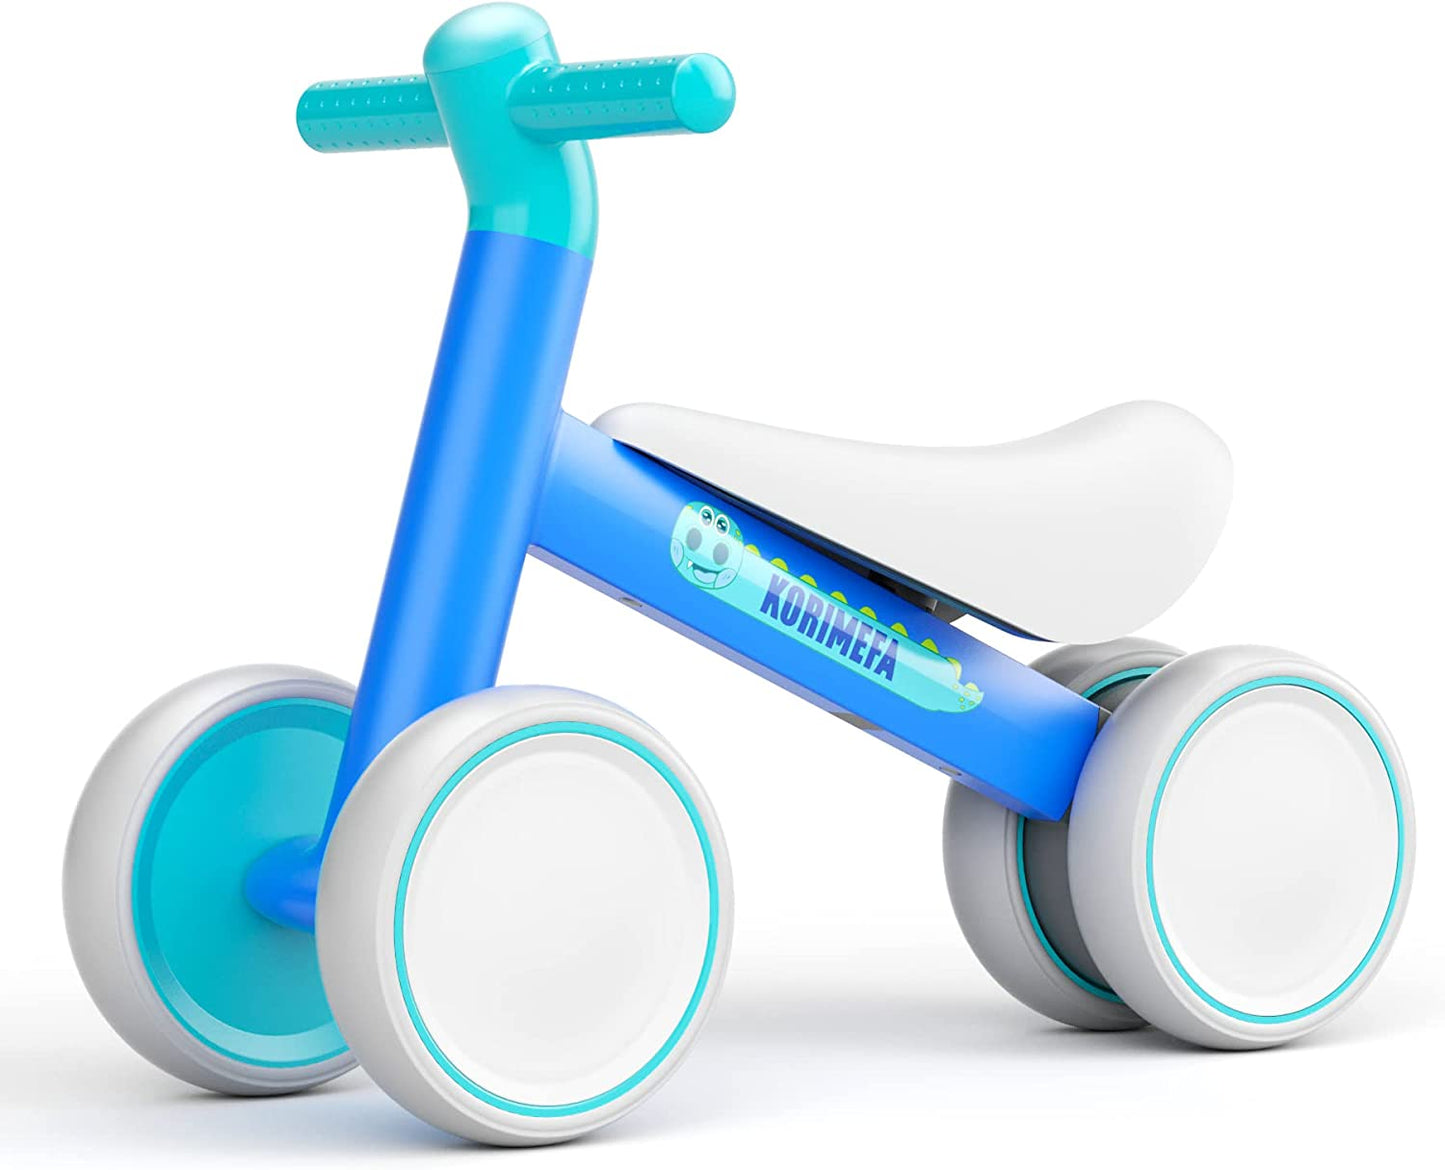 Baby Balance Bike for 1 Year Old Boys Girls Ride on Toys Kids Balance Bike for 1-3 Years Old Toddlers First Bike Birthday Gift